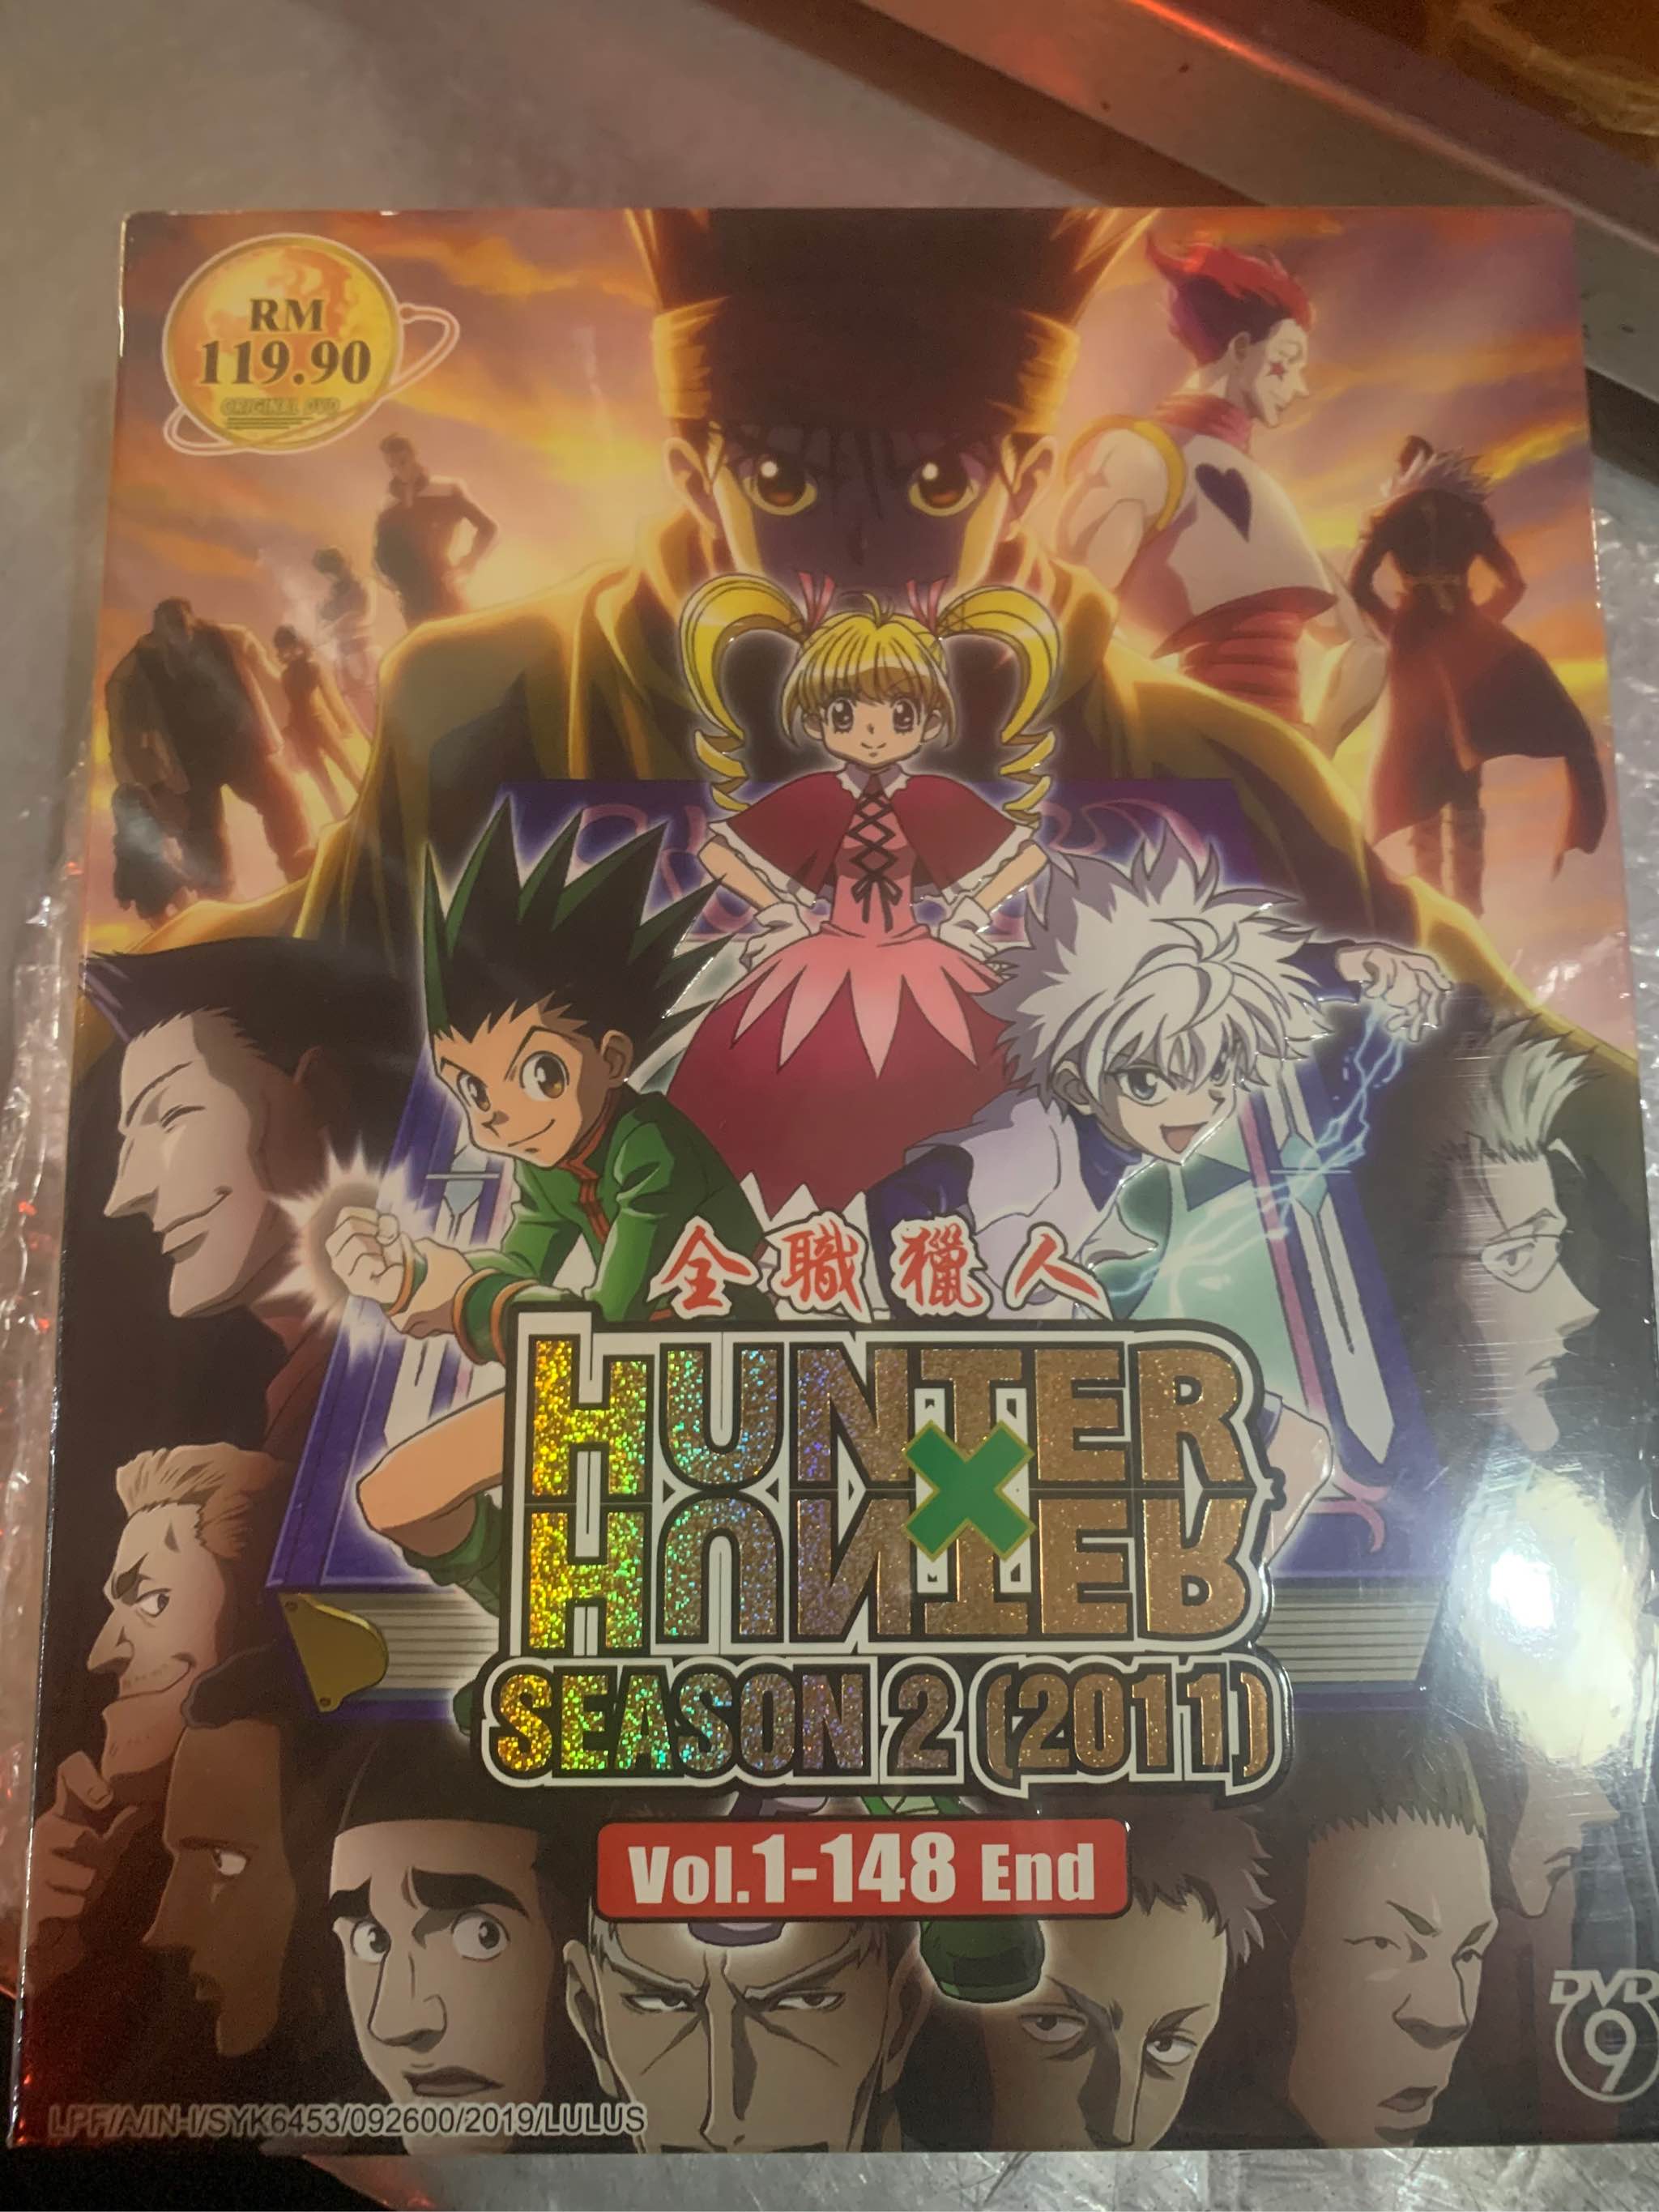 DVD Anime HUNTER X HUNTER Complete Season 2 (2011)VOL (1-148 End